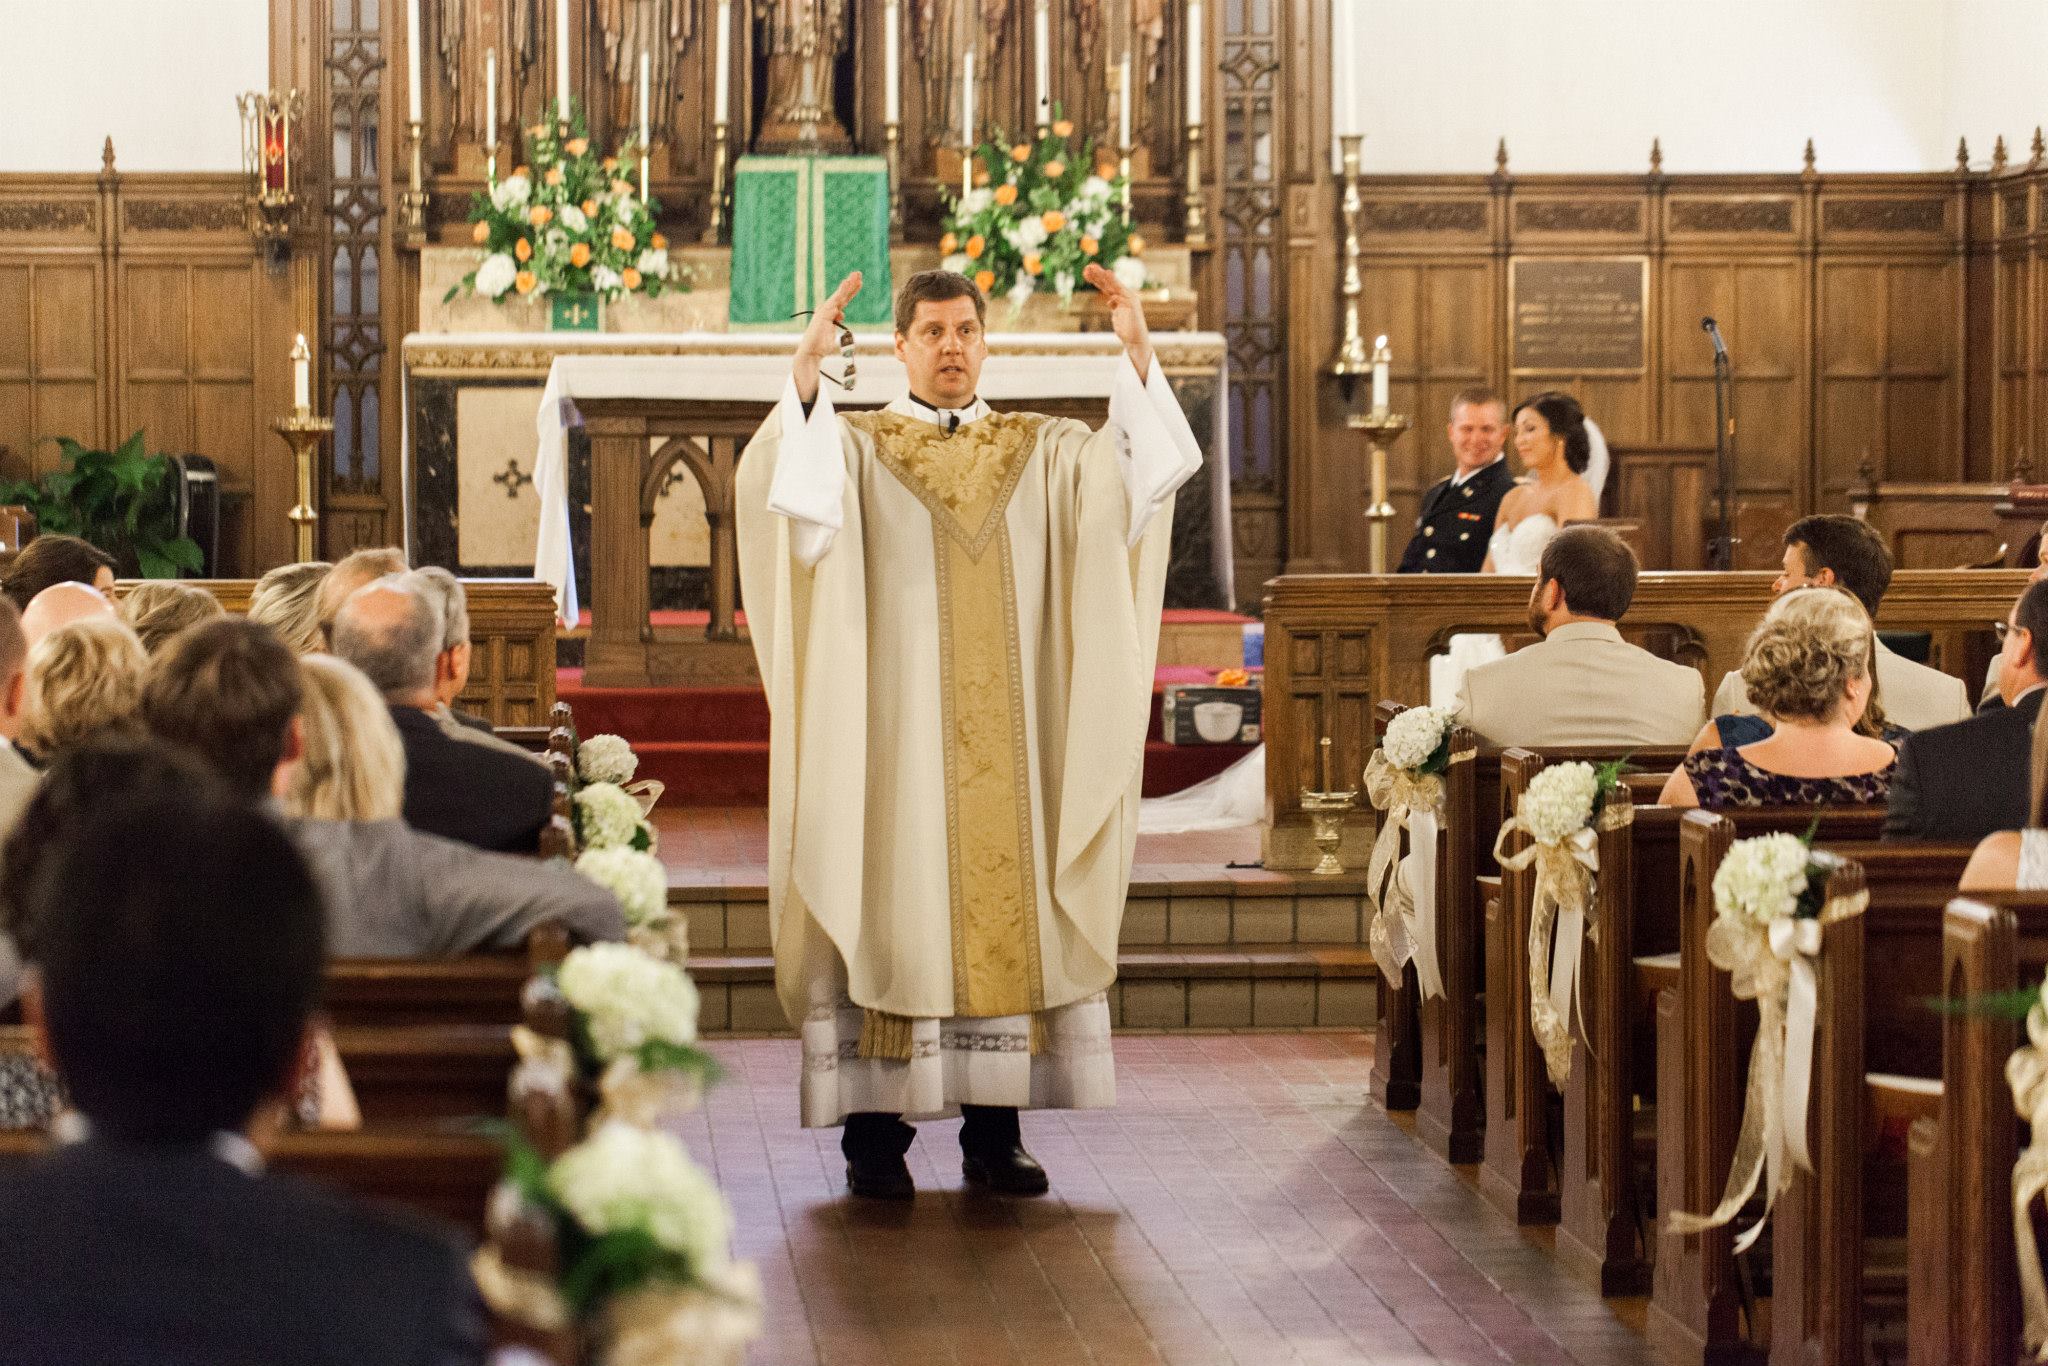 Fr. Charlie at a wedding, October 2014